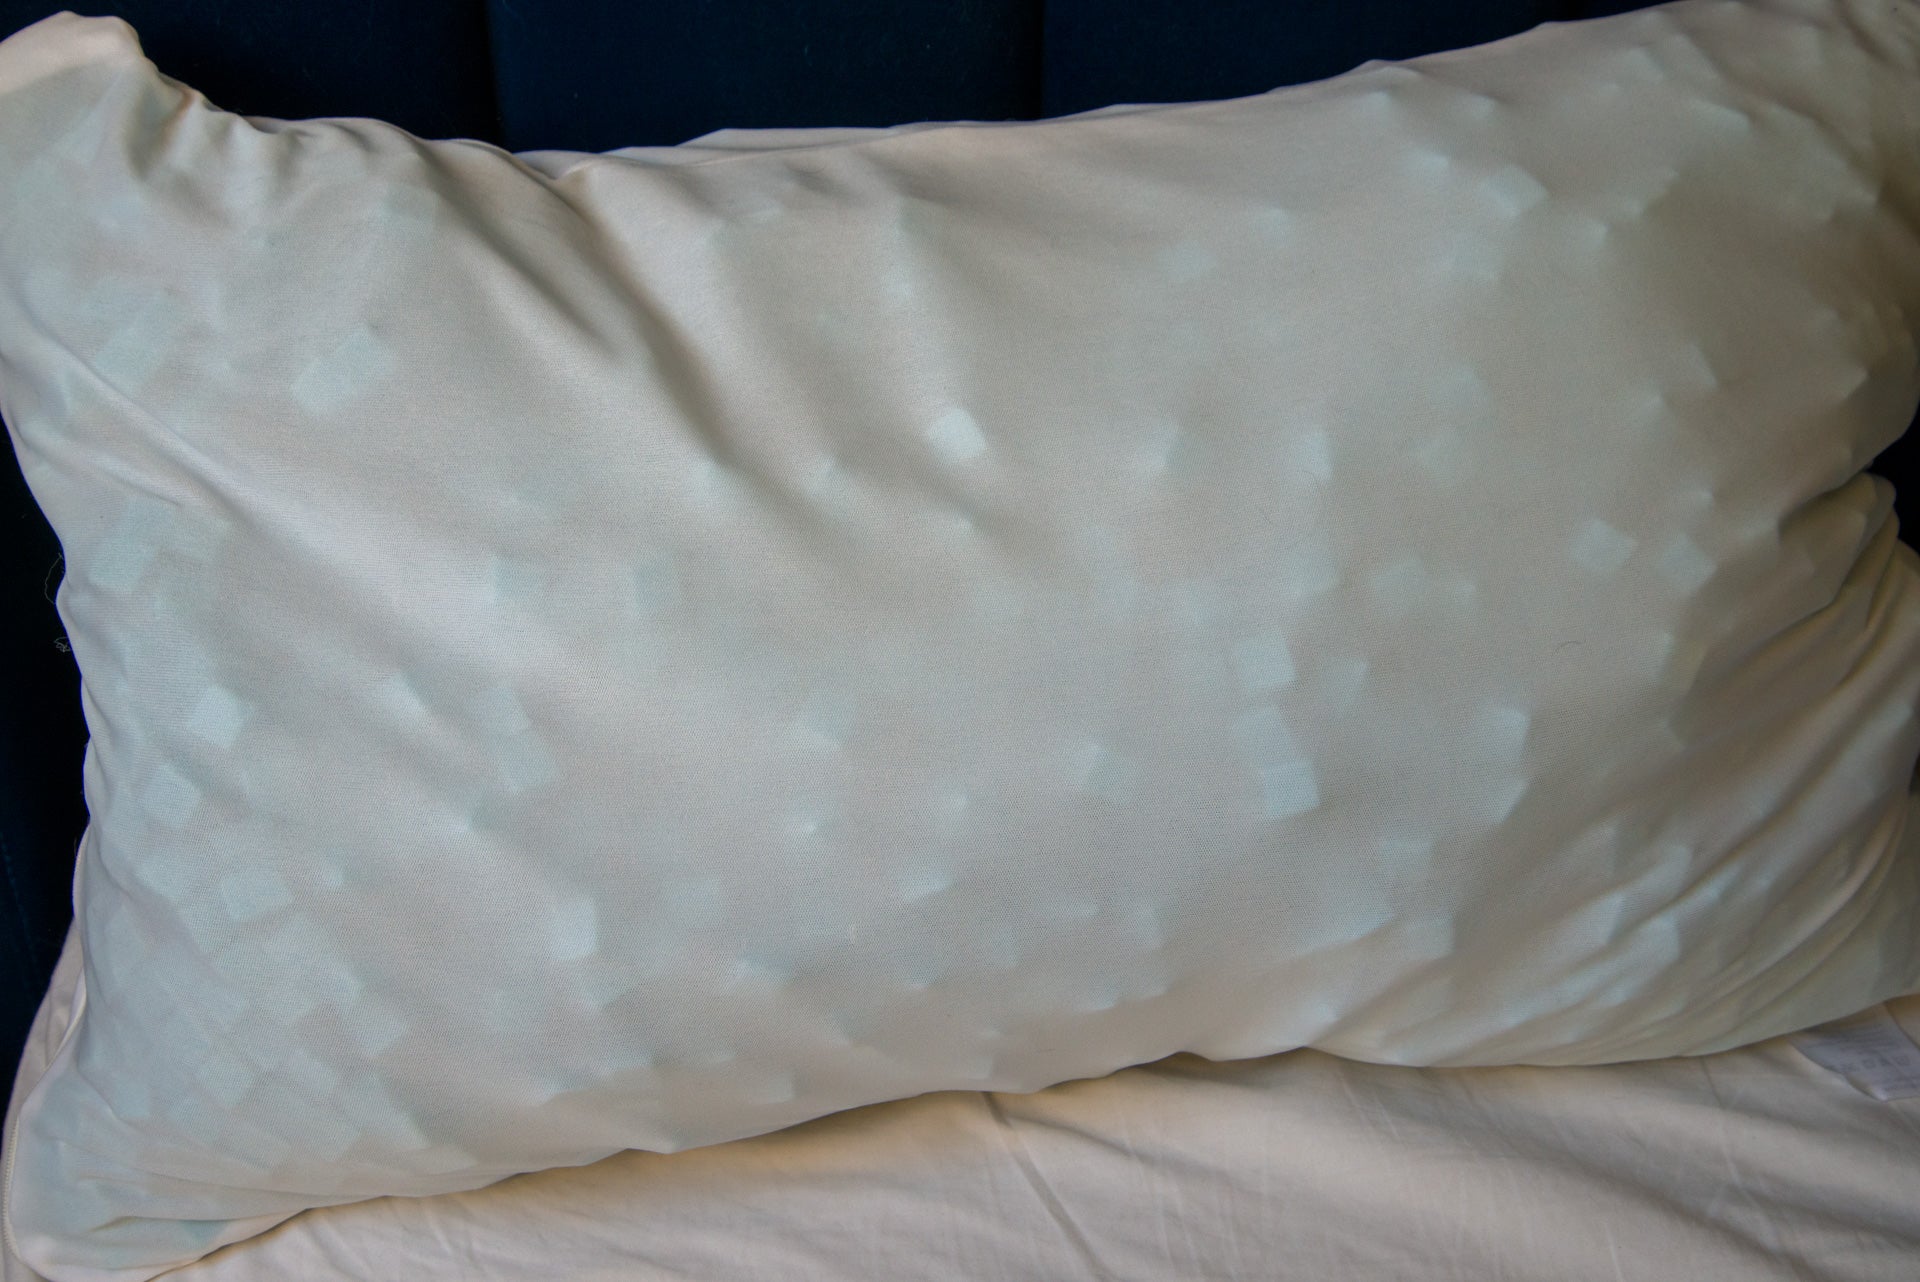 Simba Hybrid Pillow filling